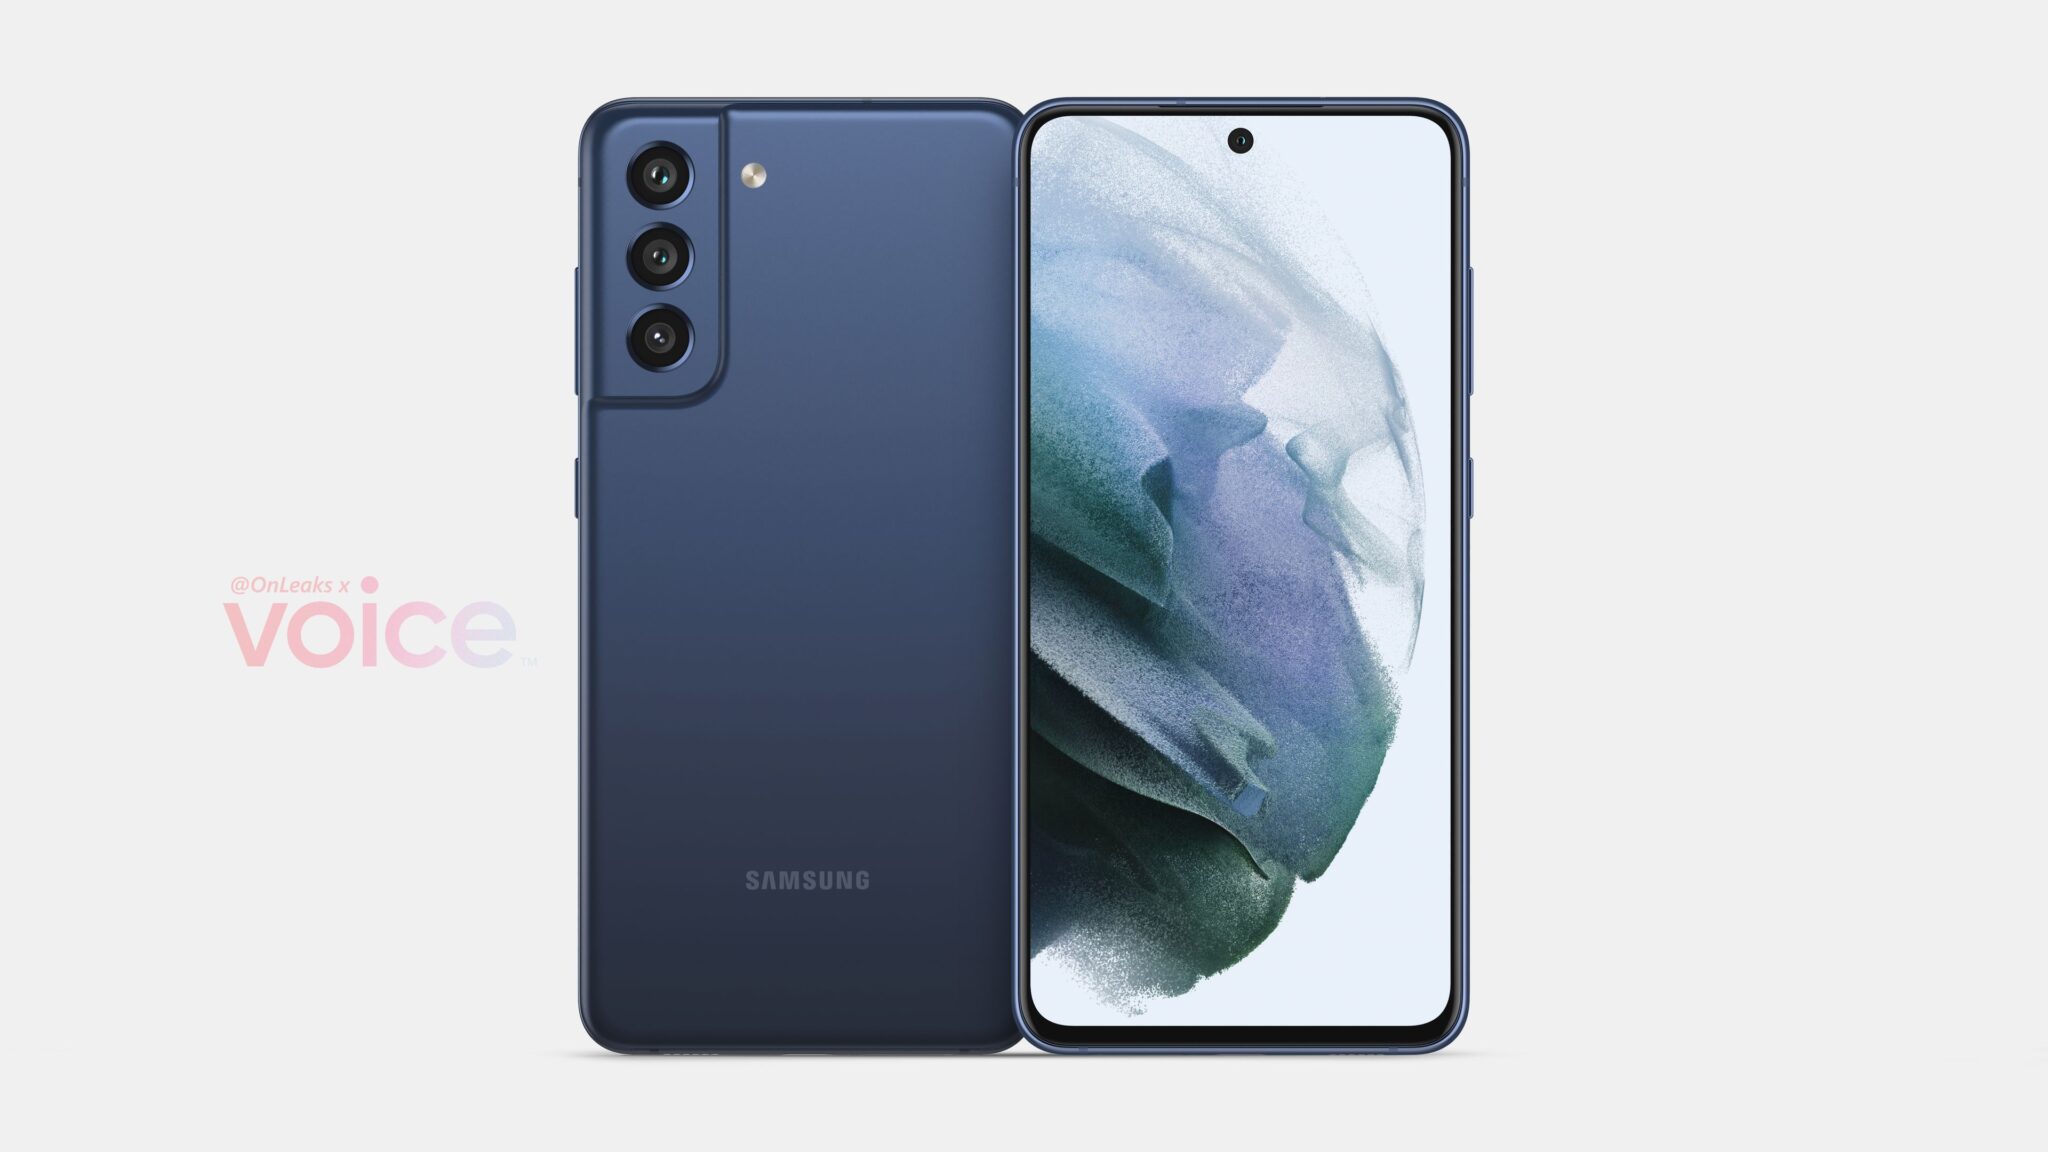 Samsung Galaxy S21 FE renders